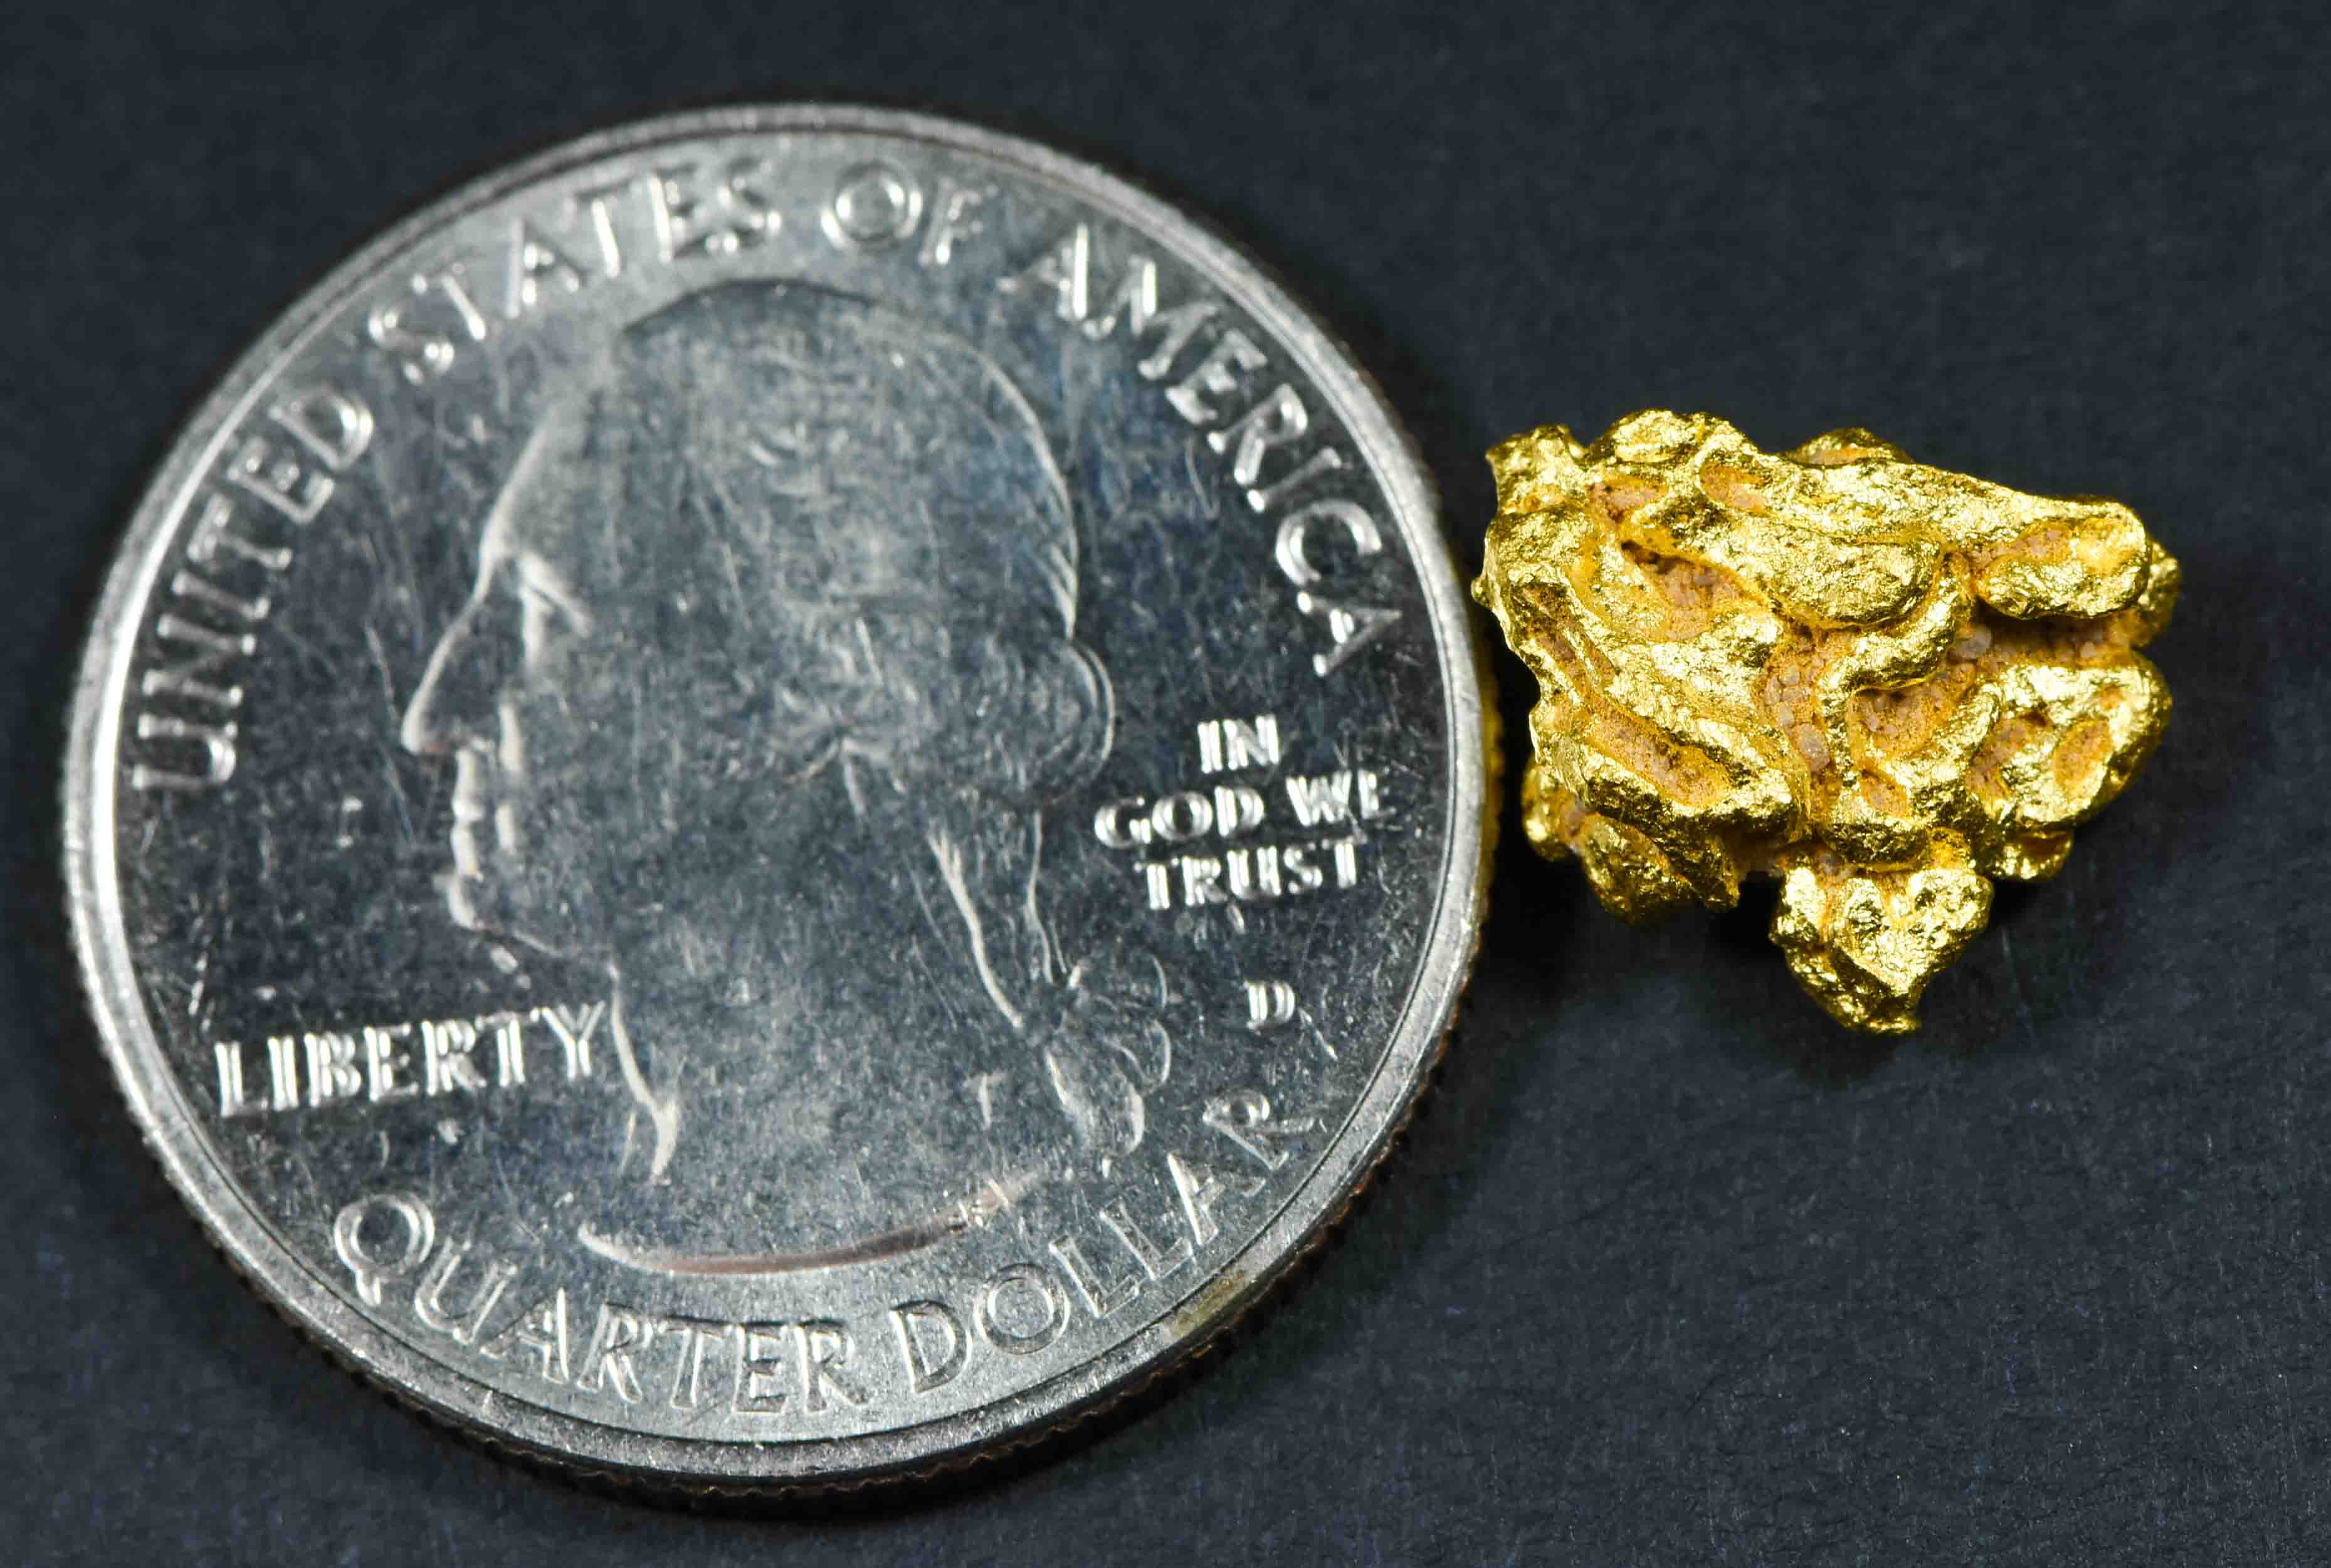 #22 Brazil Crystalline Natural Gold Nugget 2.57 Grams